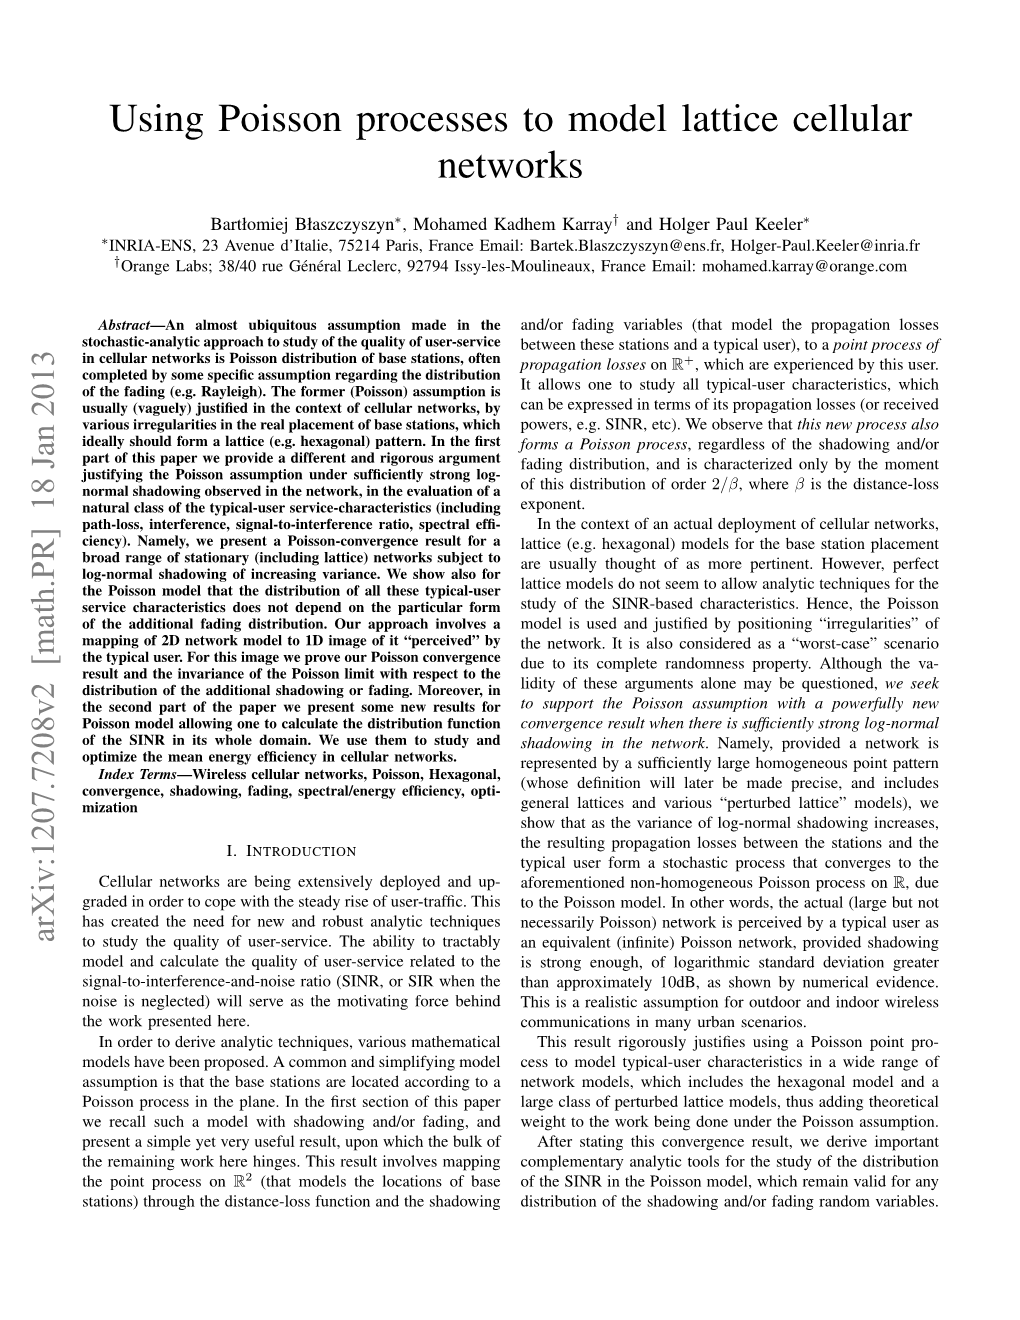 Using Poisson Processes to Model Lattice Cellular Networks'